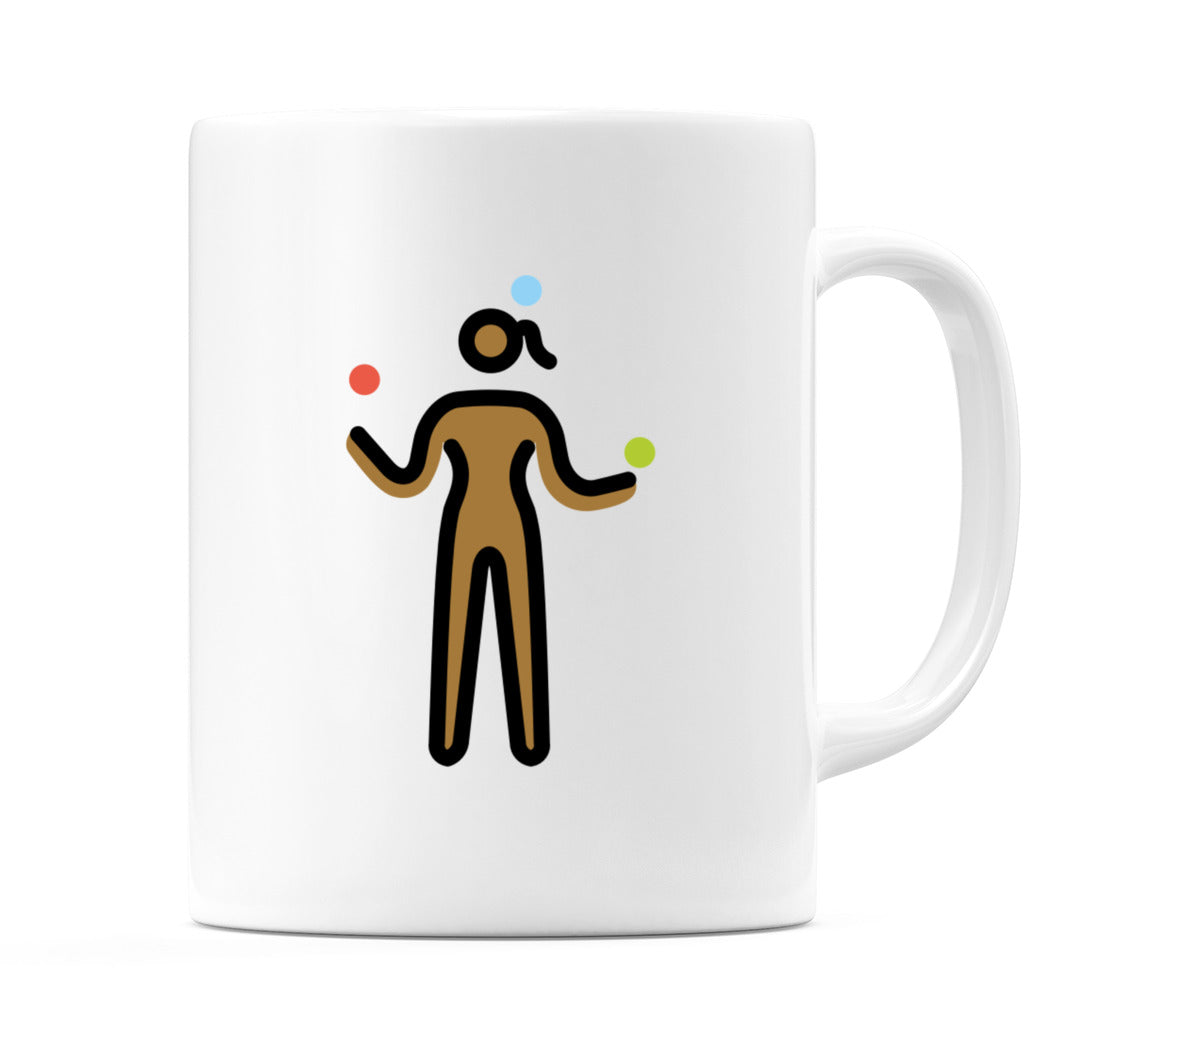 Female Juggling: Medium-Dark Skin Tone Emoji Mug